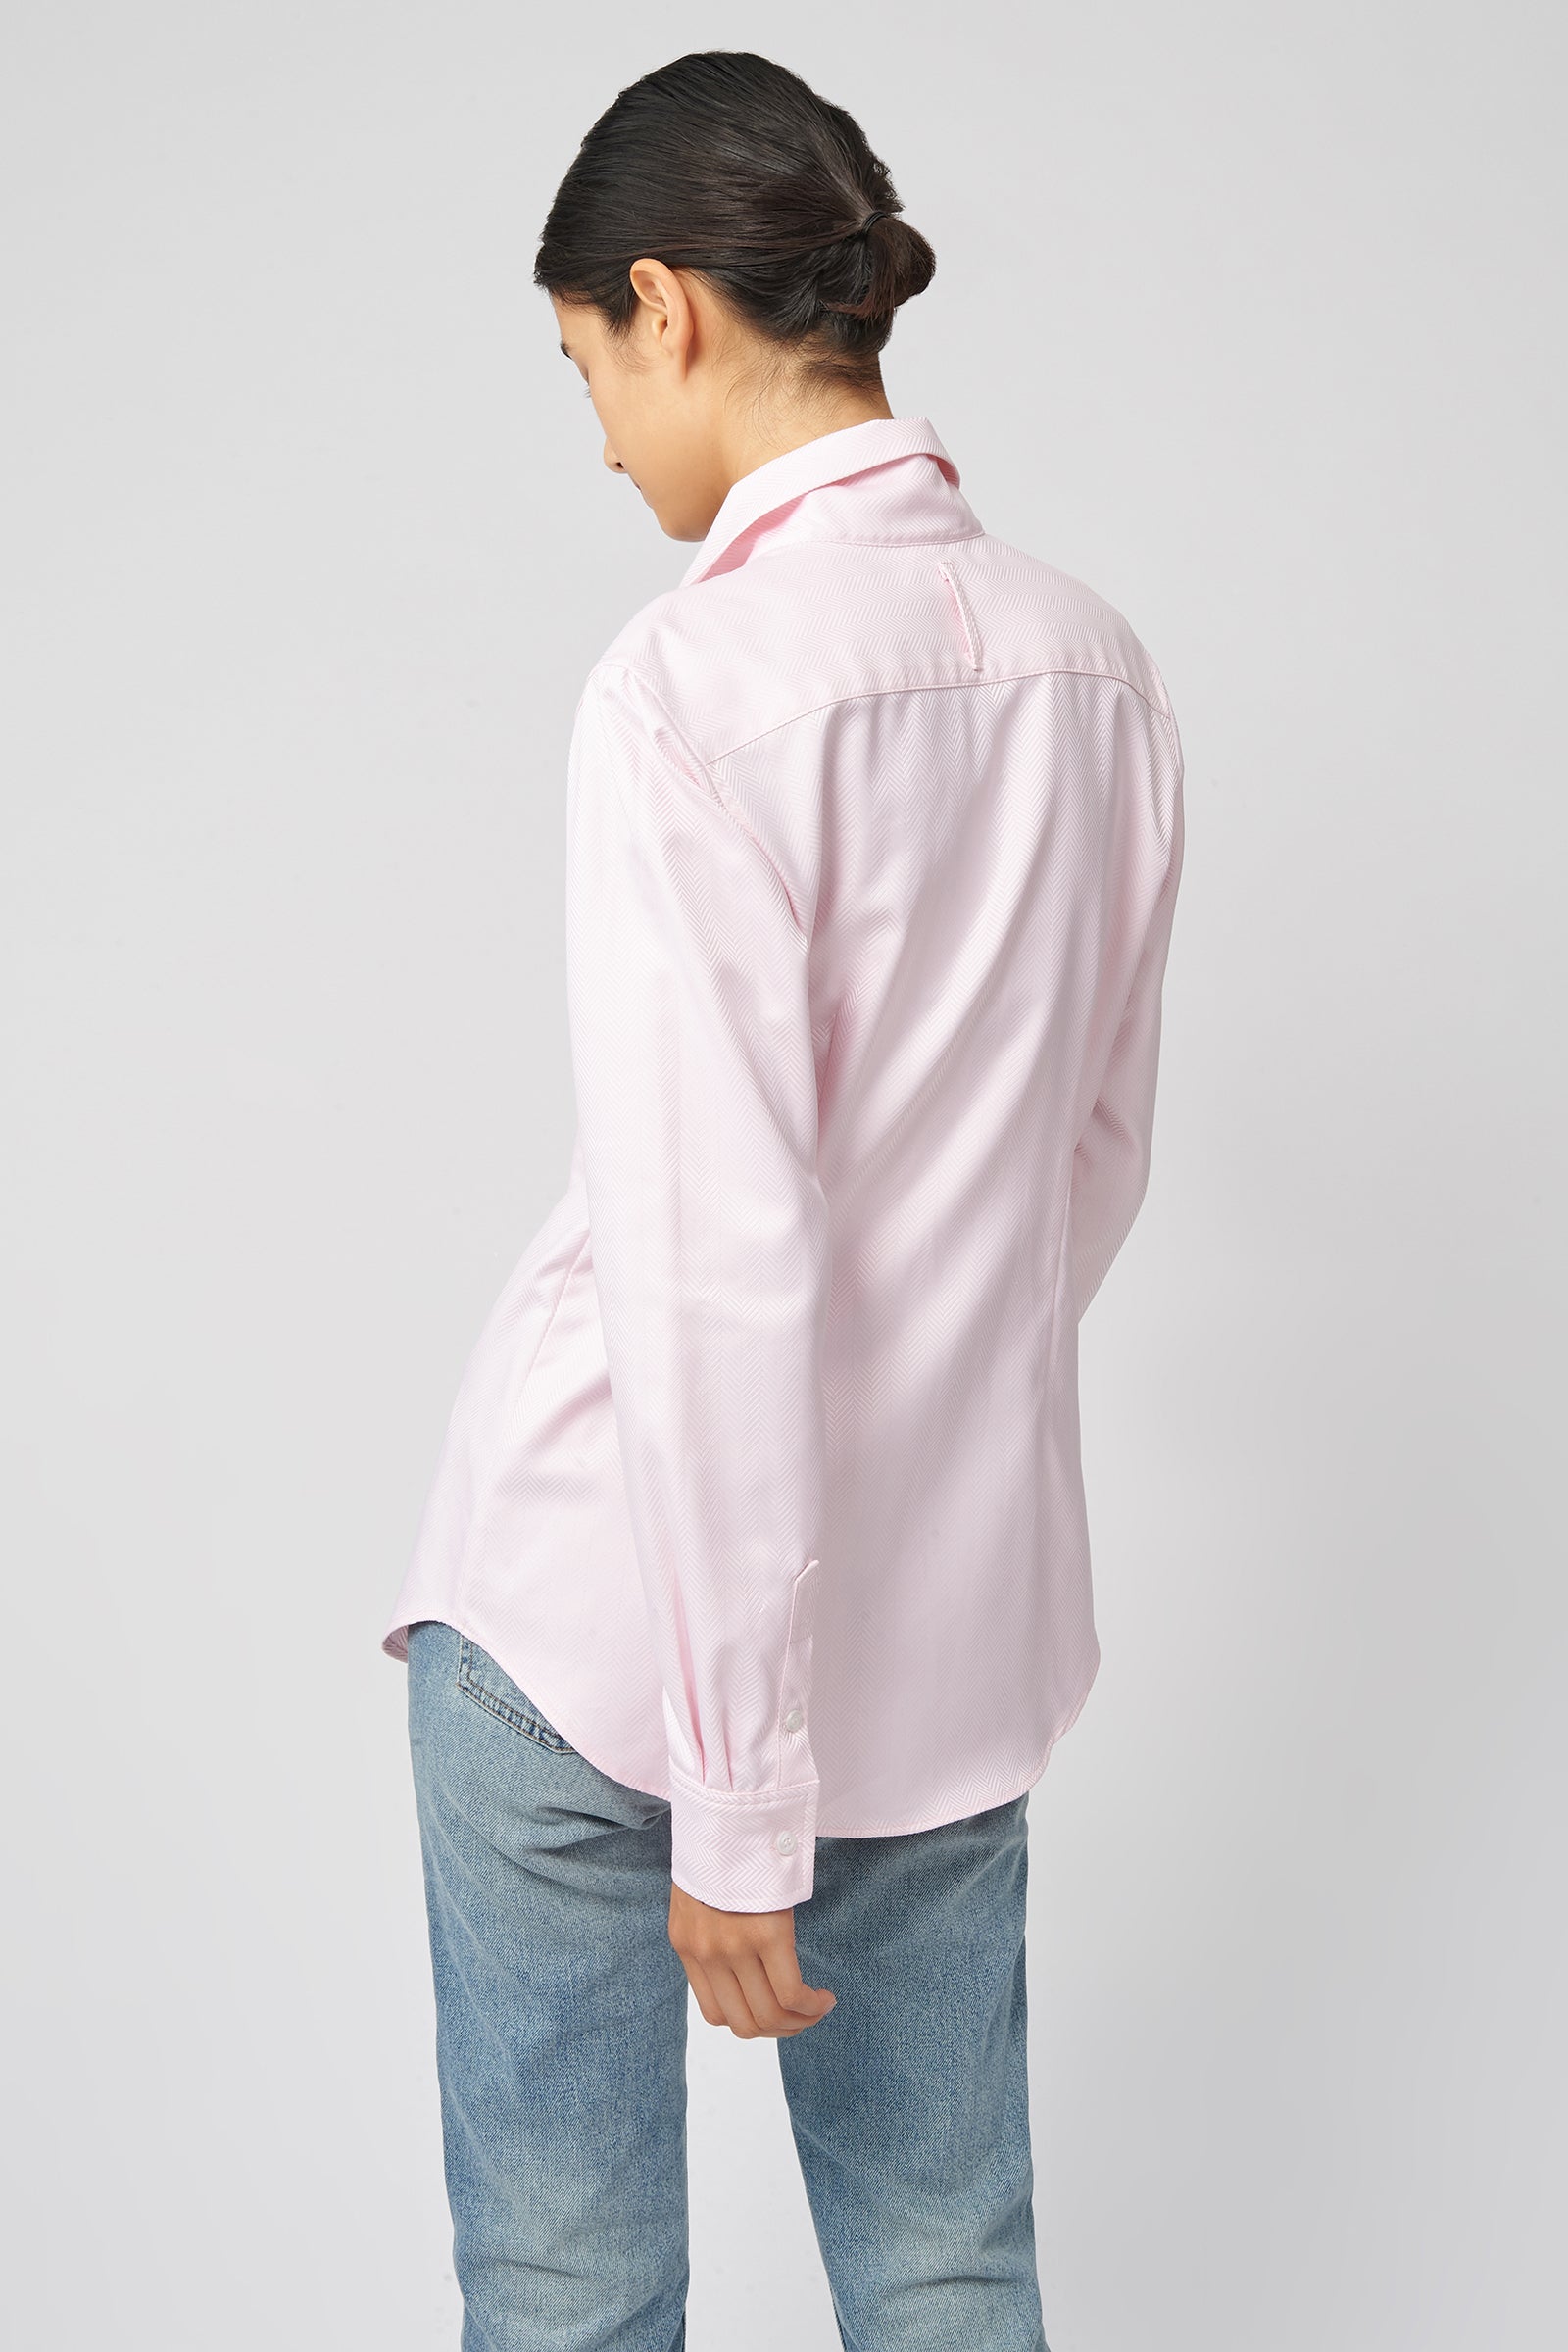 Kal Rieman Ginna Tailored Shirt in Pink Herringbone on Model Back View